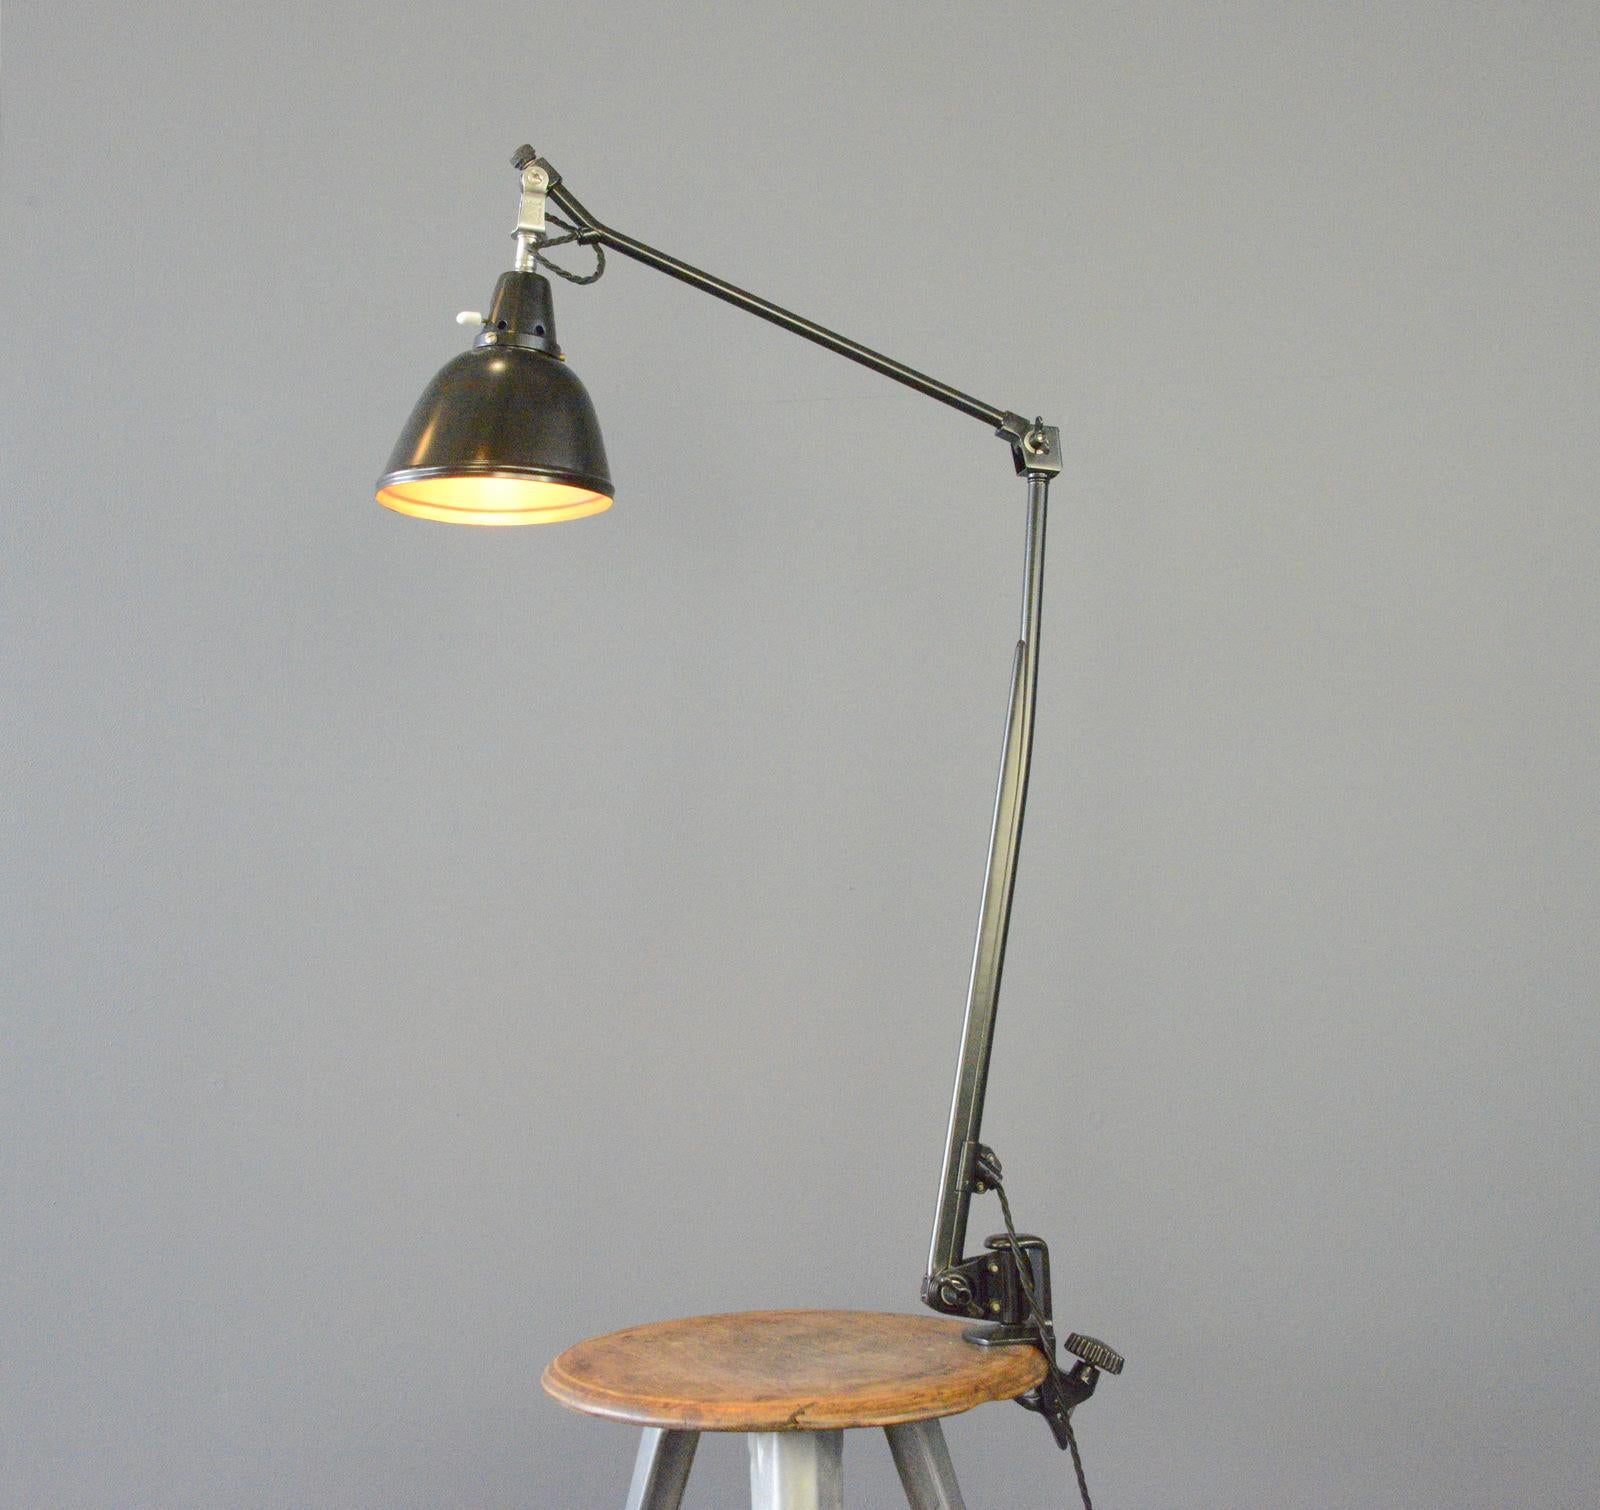 German Midgard Typ 114 Table Lamp By Curt Fischer Circa 1930s